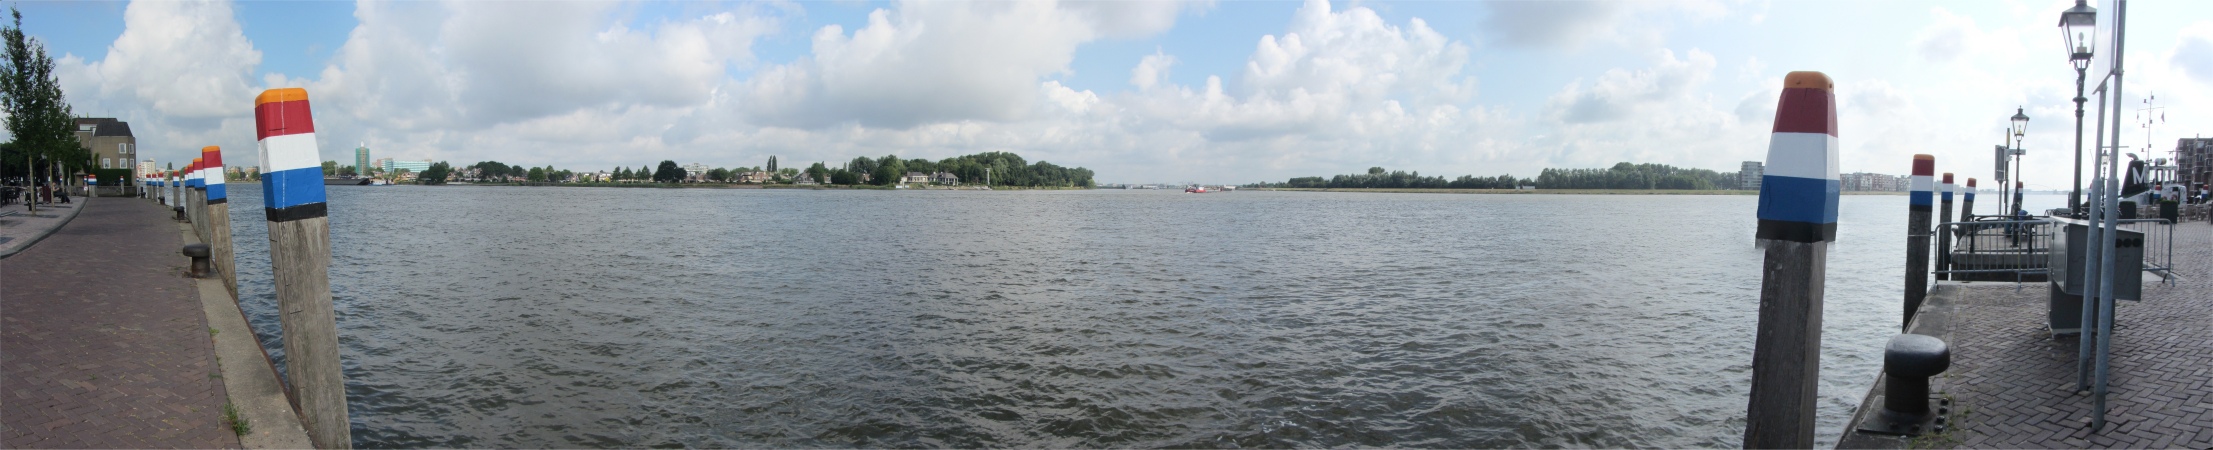 river_confluence_in_dordrecht